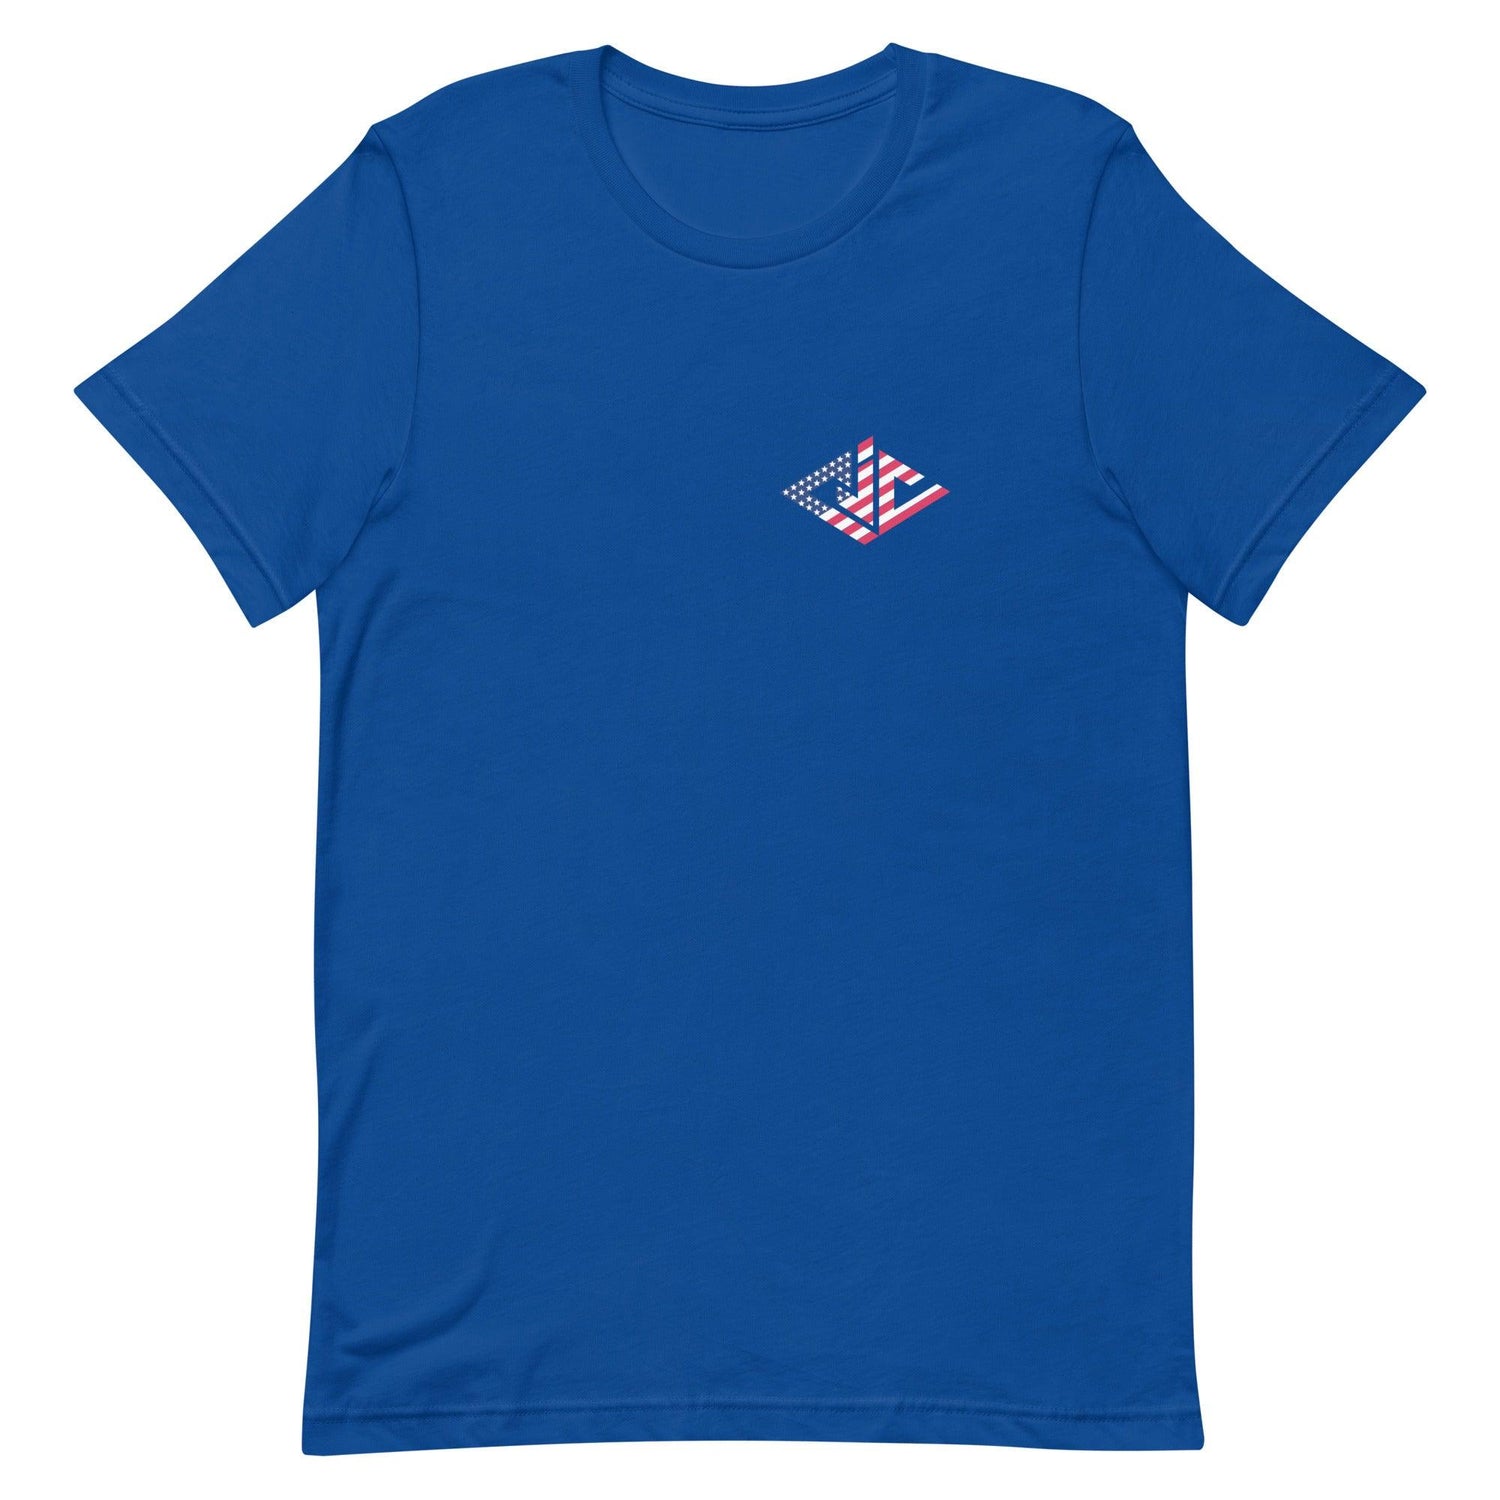 CJ Cummings “Signature” t-shirt - Fan Arch